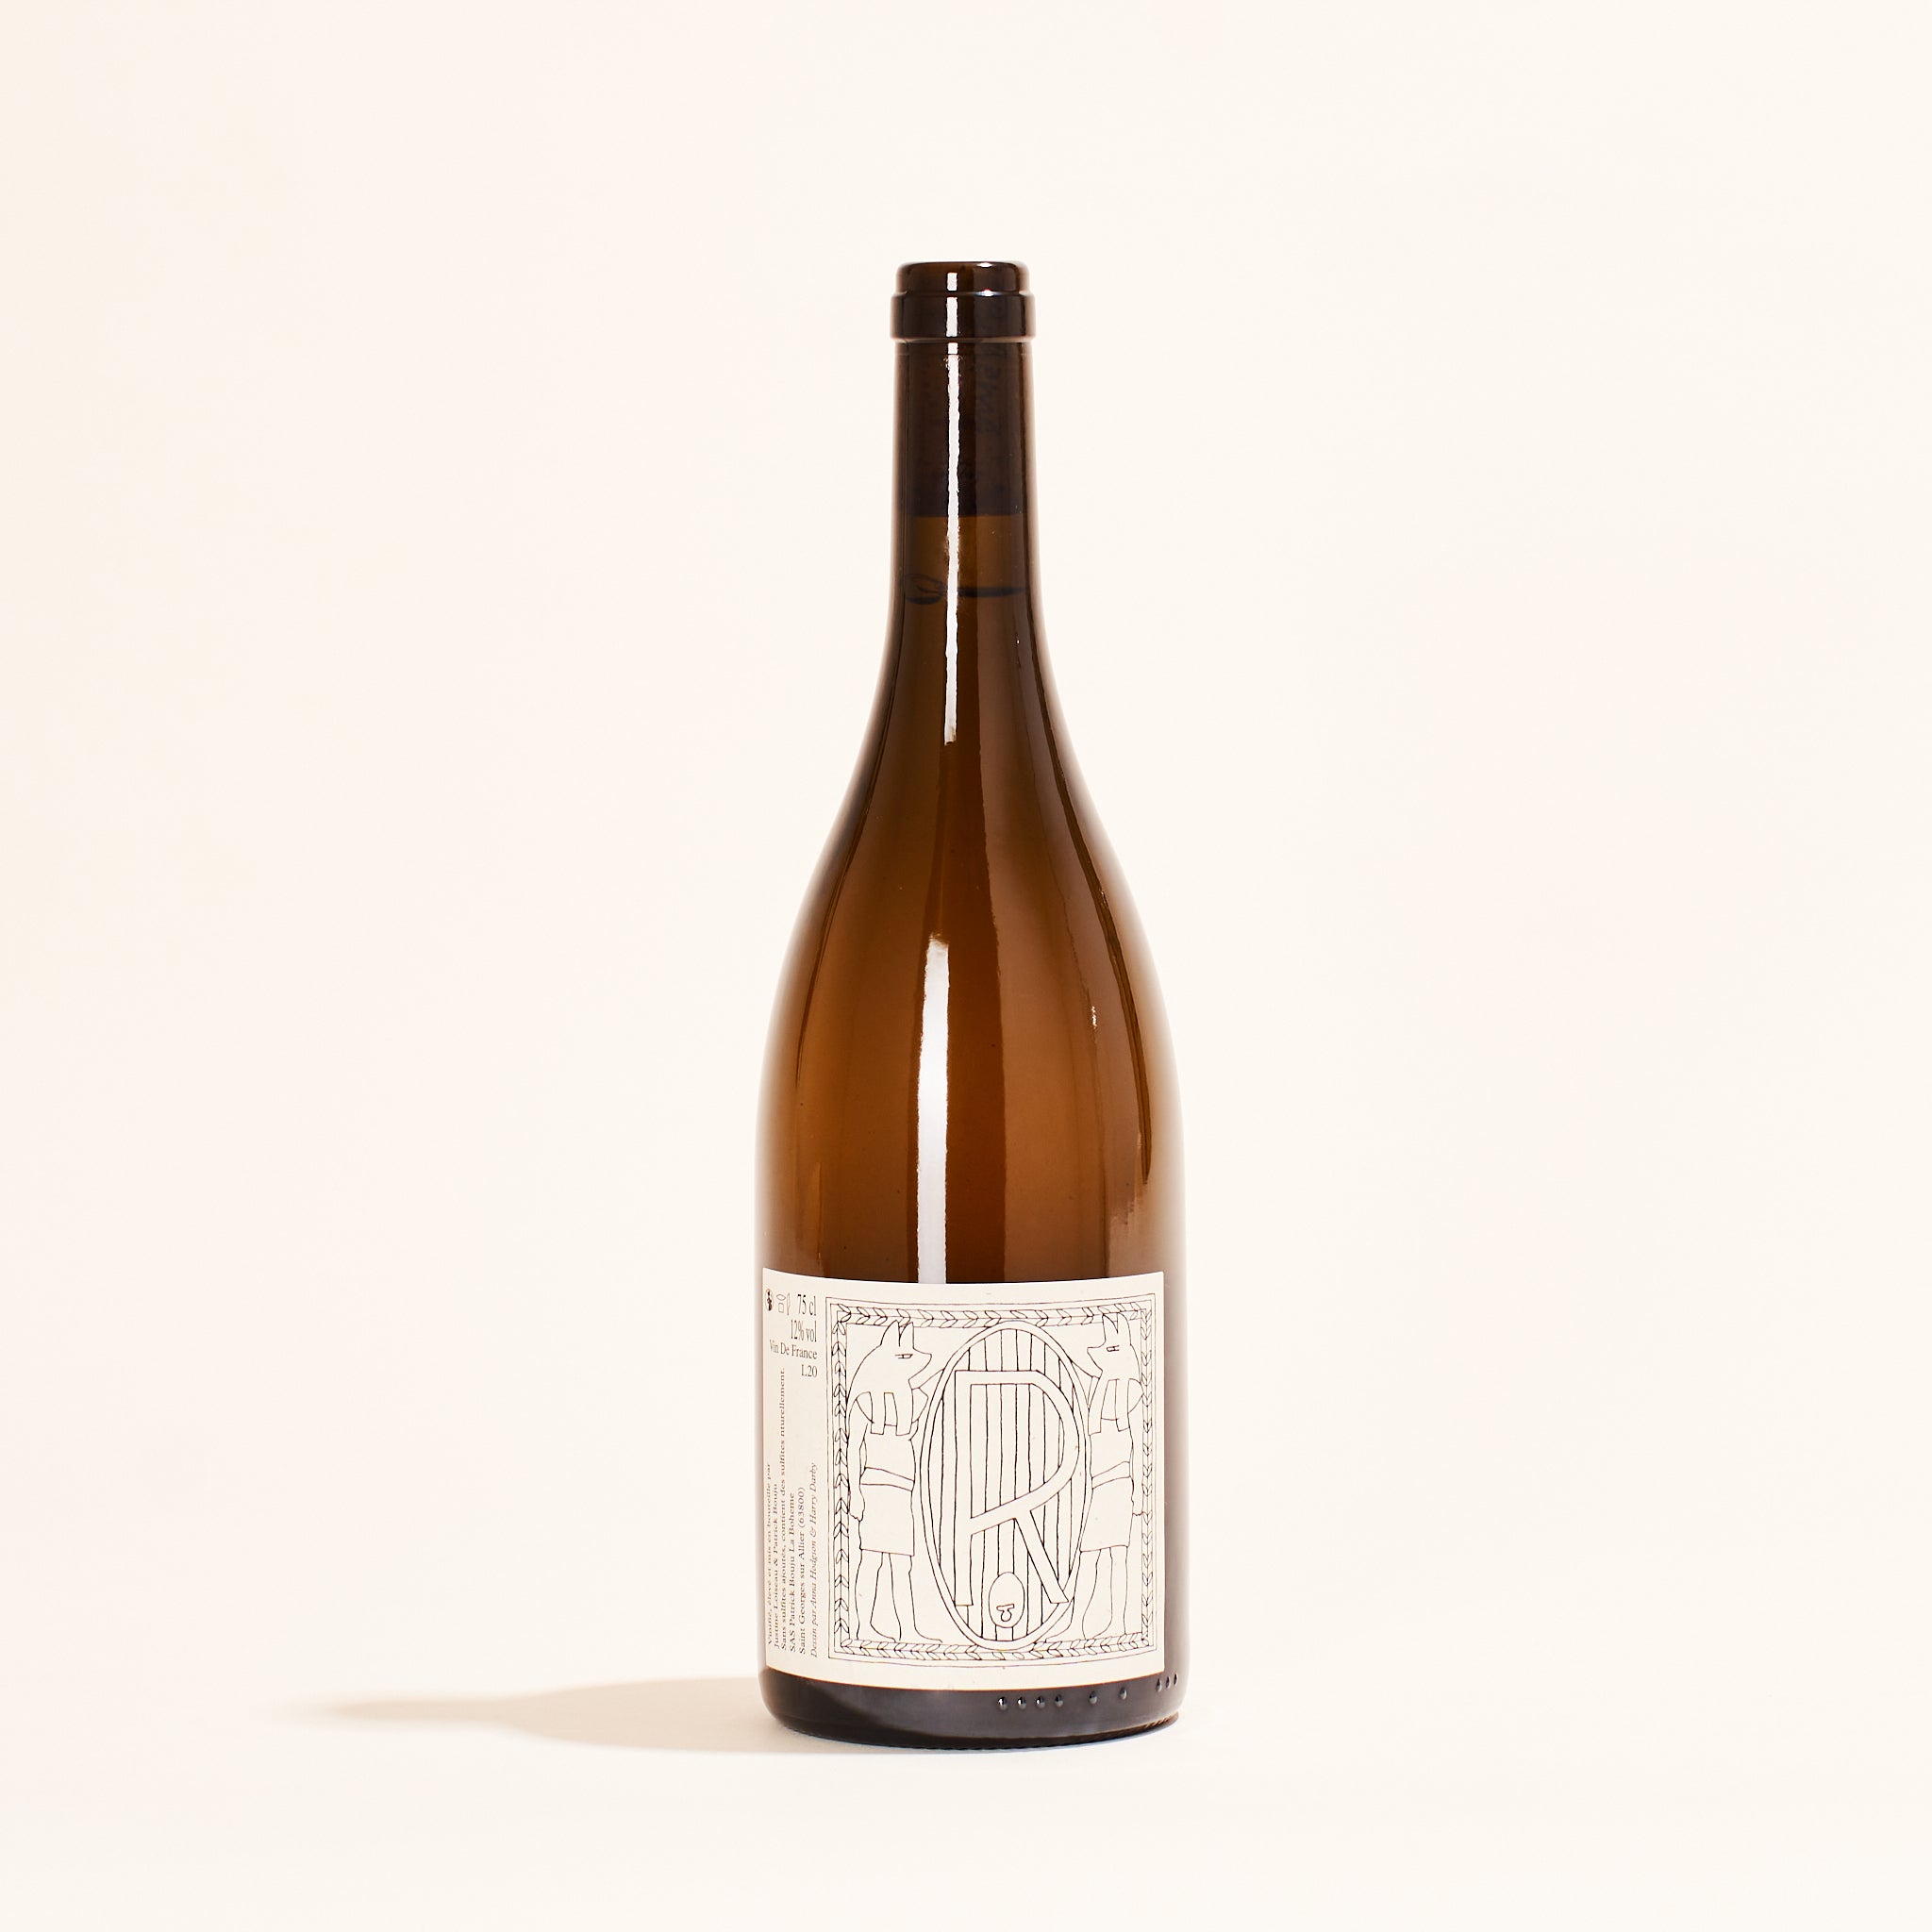 Domaine la Boheme "R" VDF Blanc riesling natural white wine Alsace France 